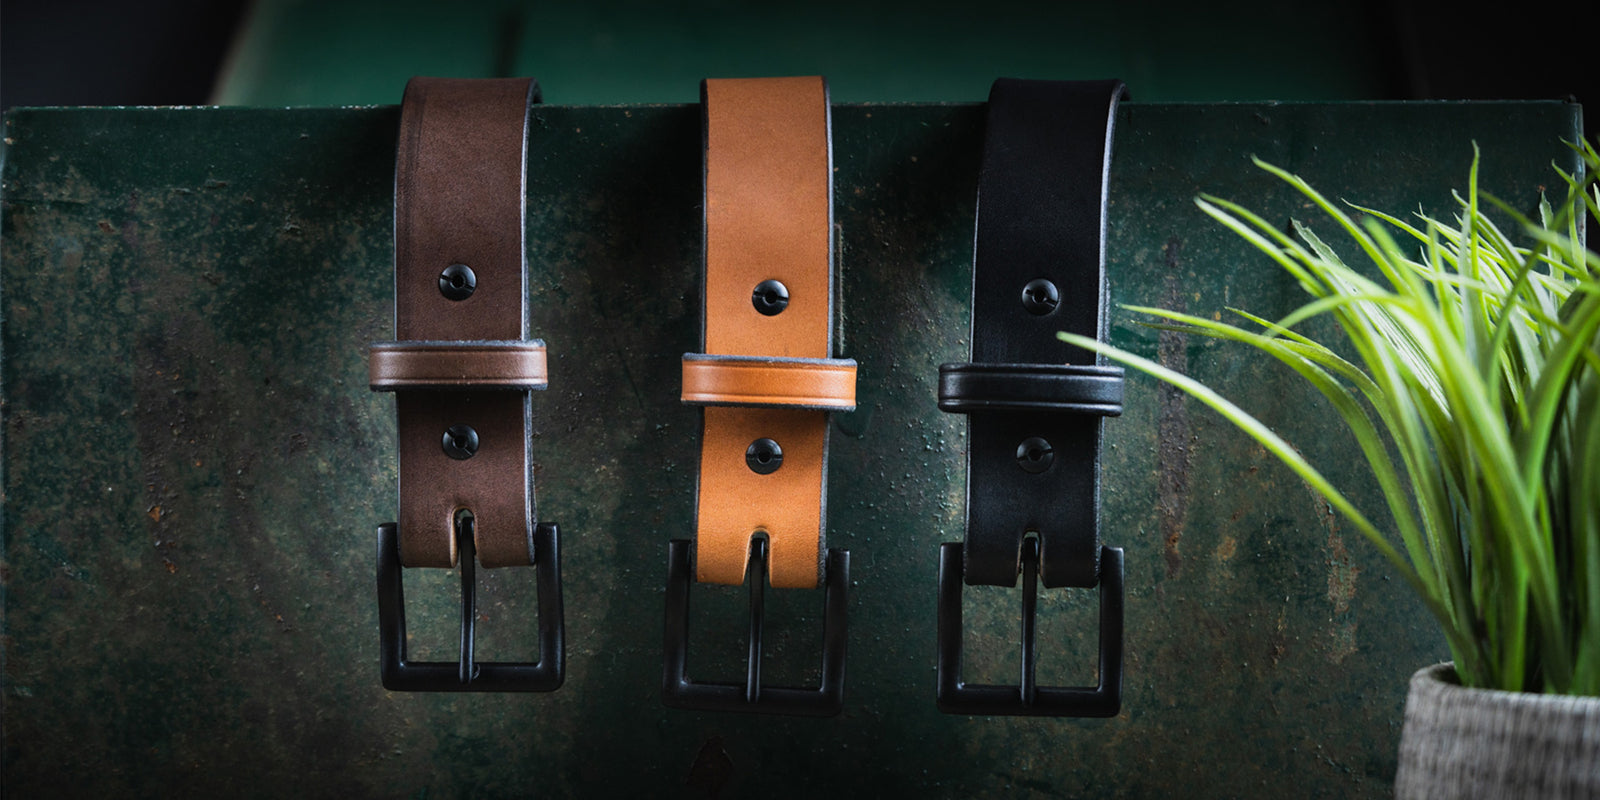 Belts Men Ultimates, Recent collections